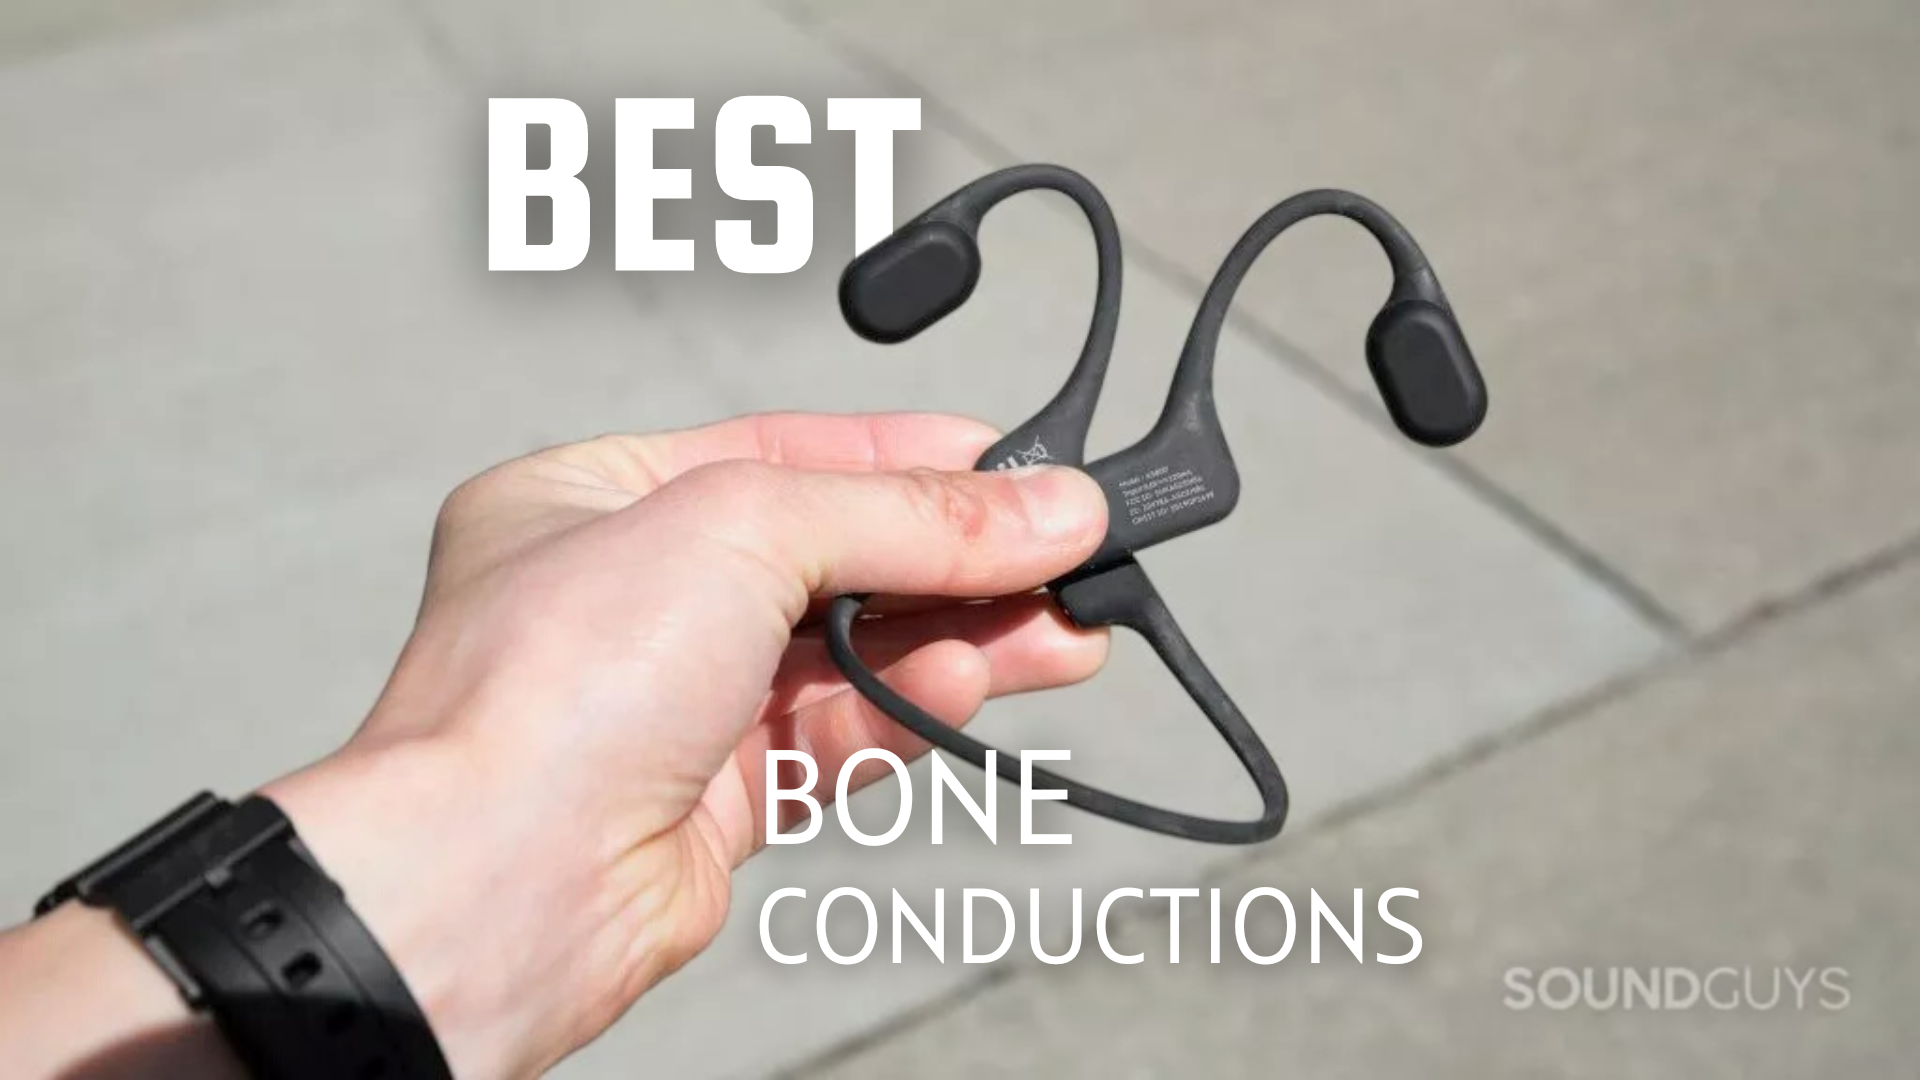 Best bone conduction headphones